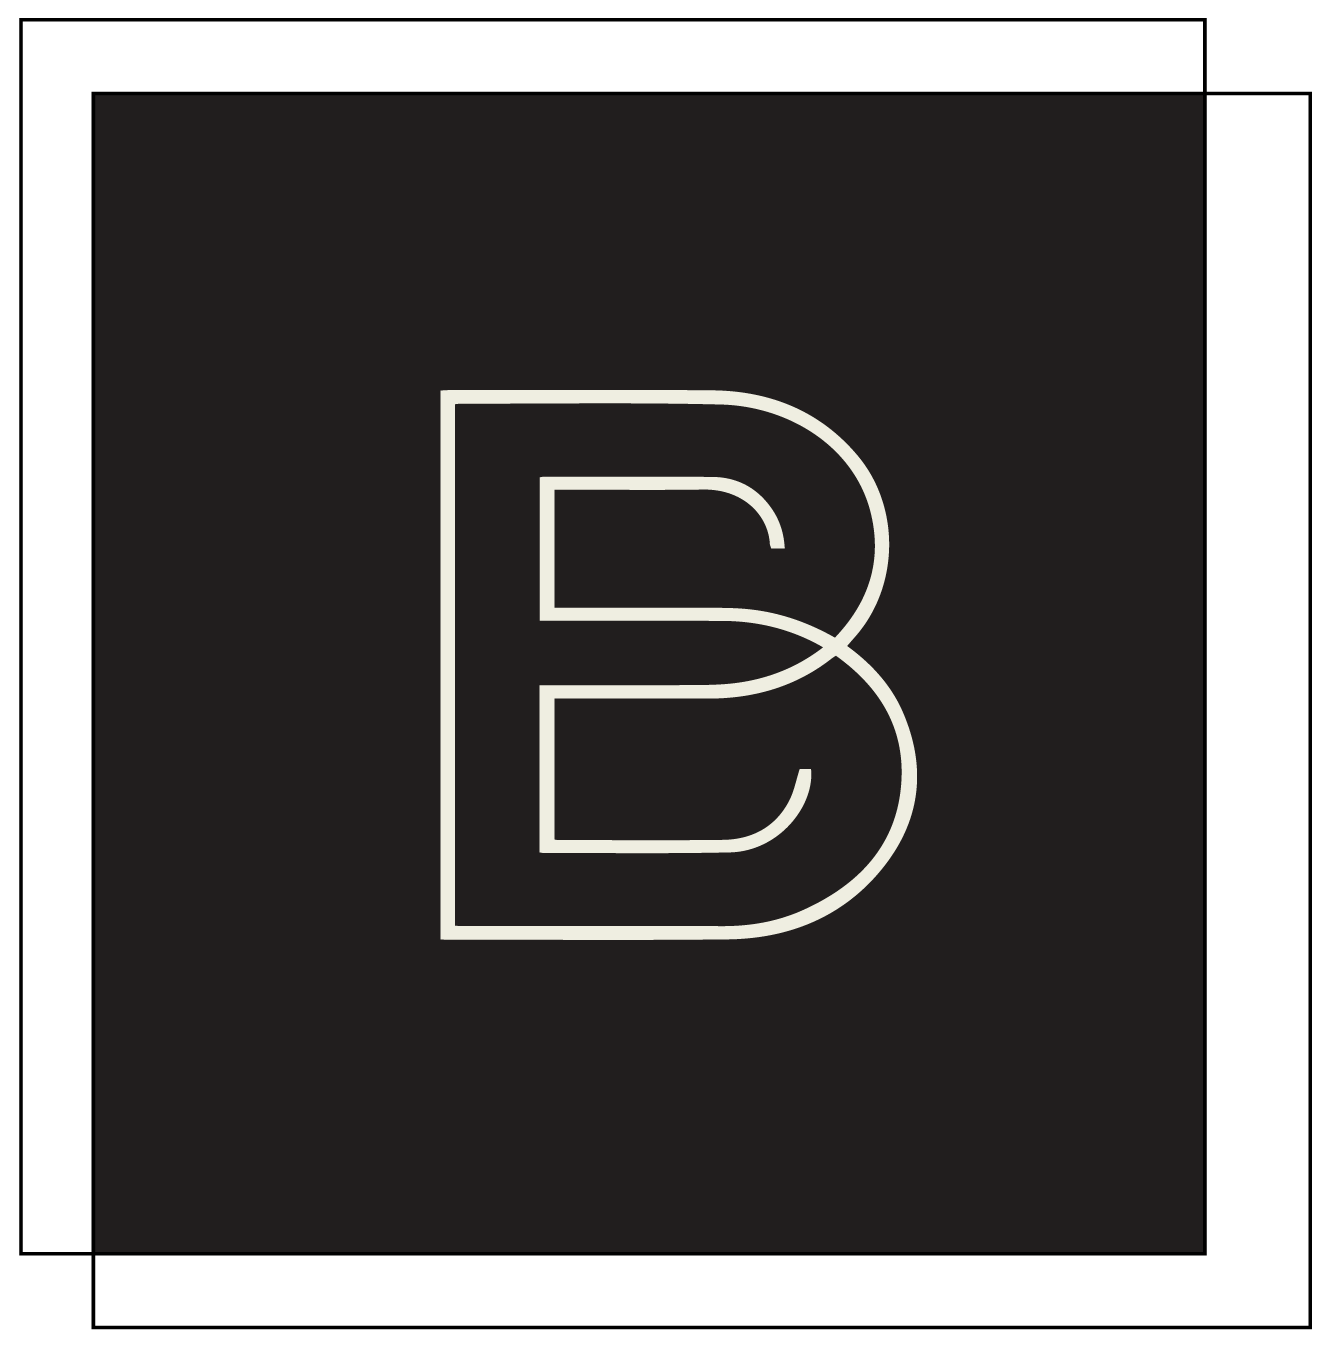 About Bianca — Bianca Boie Design